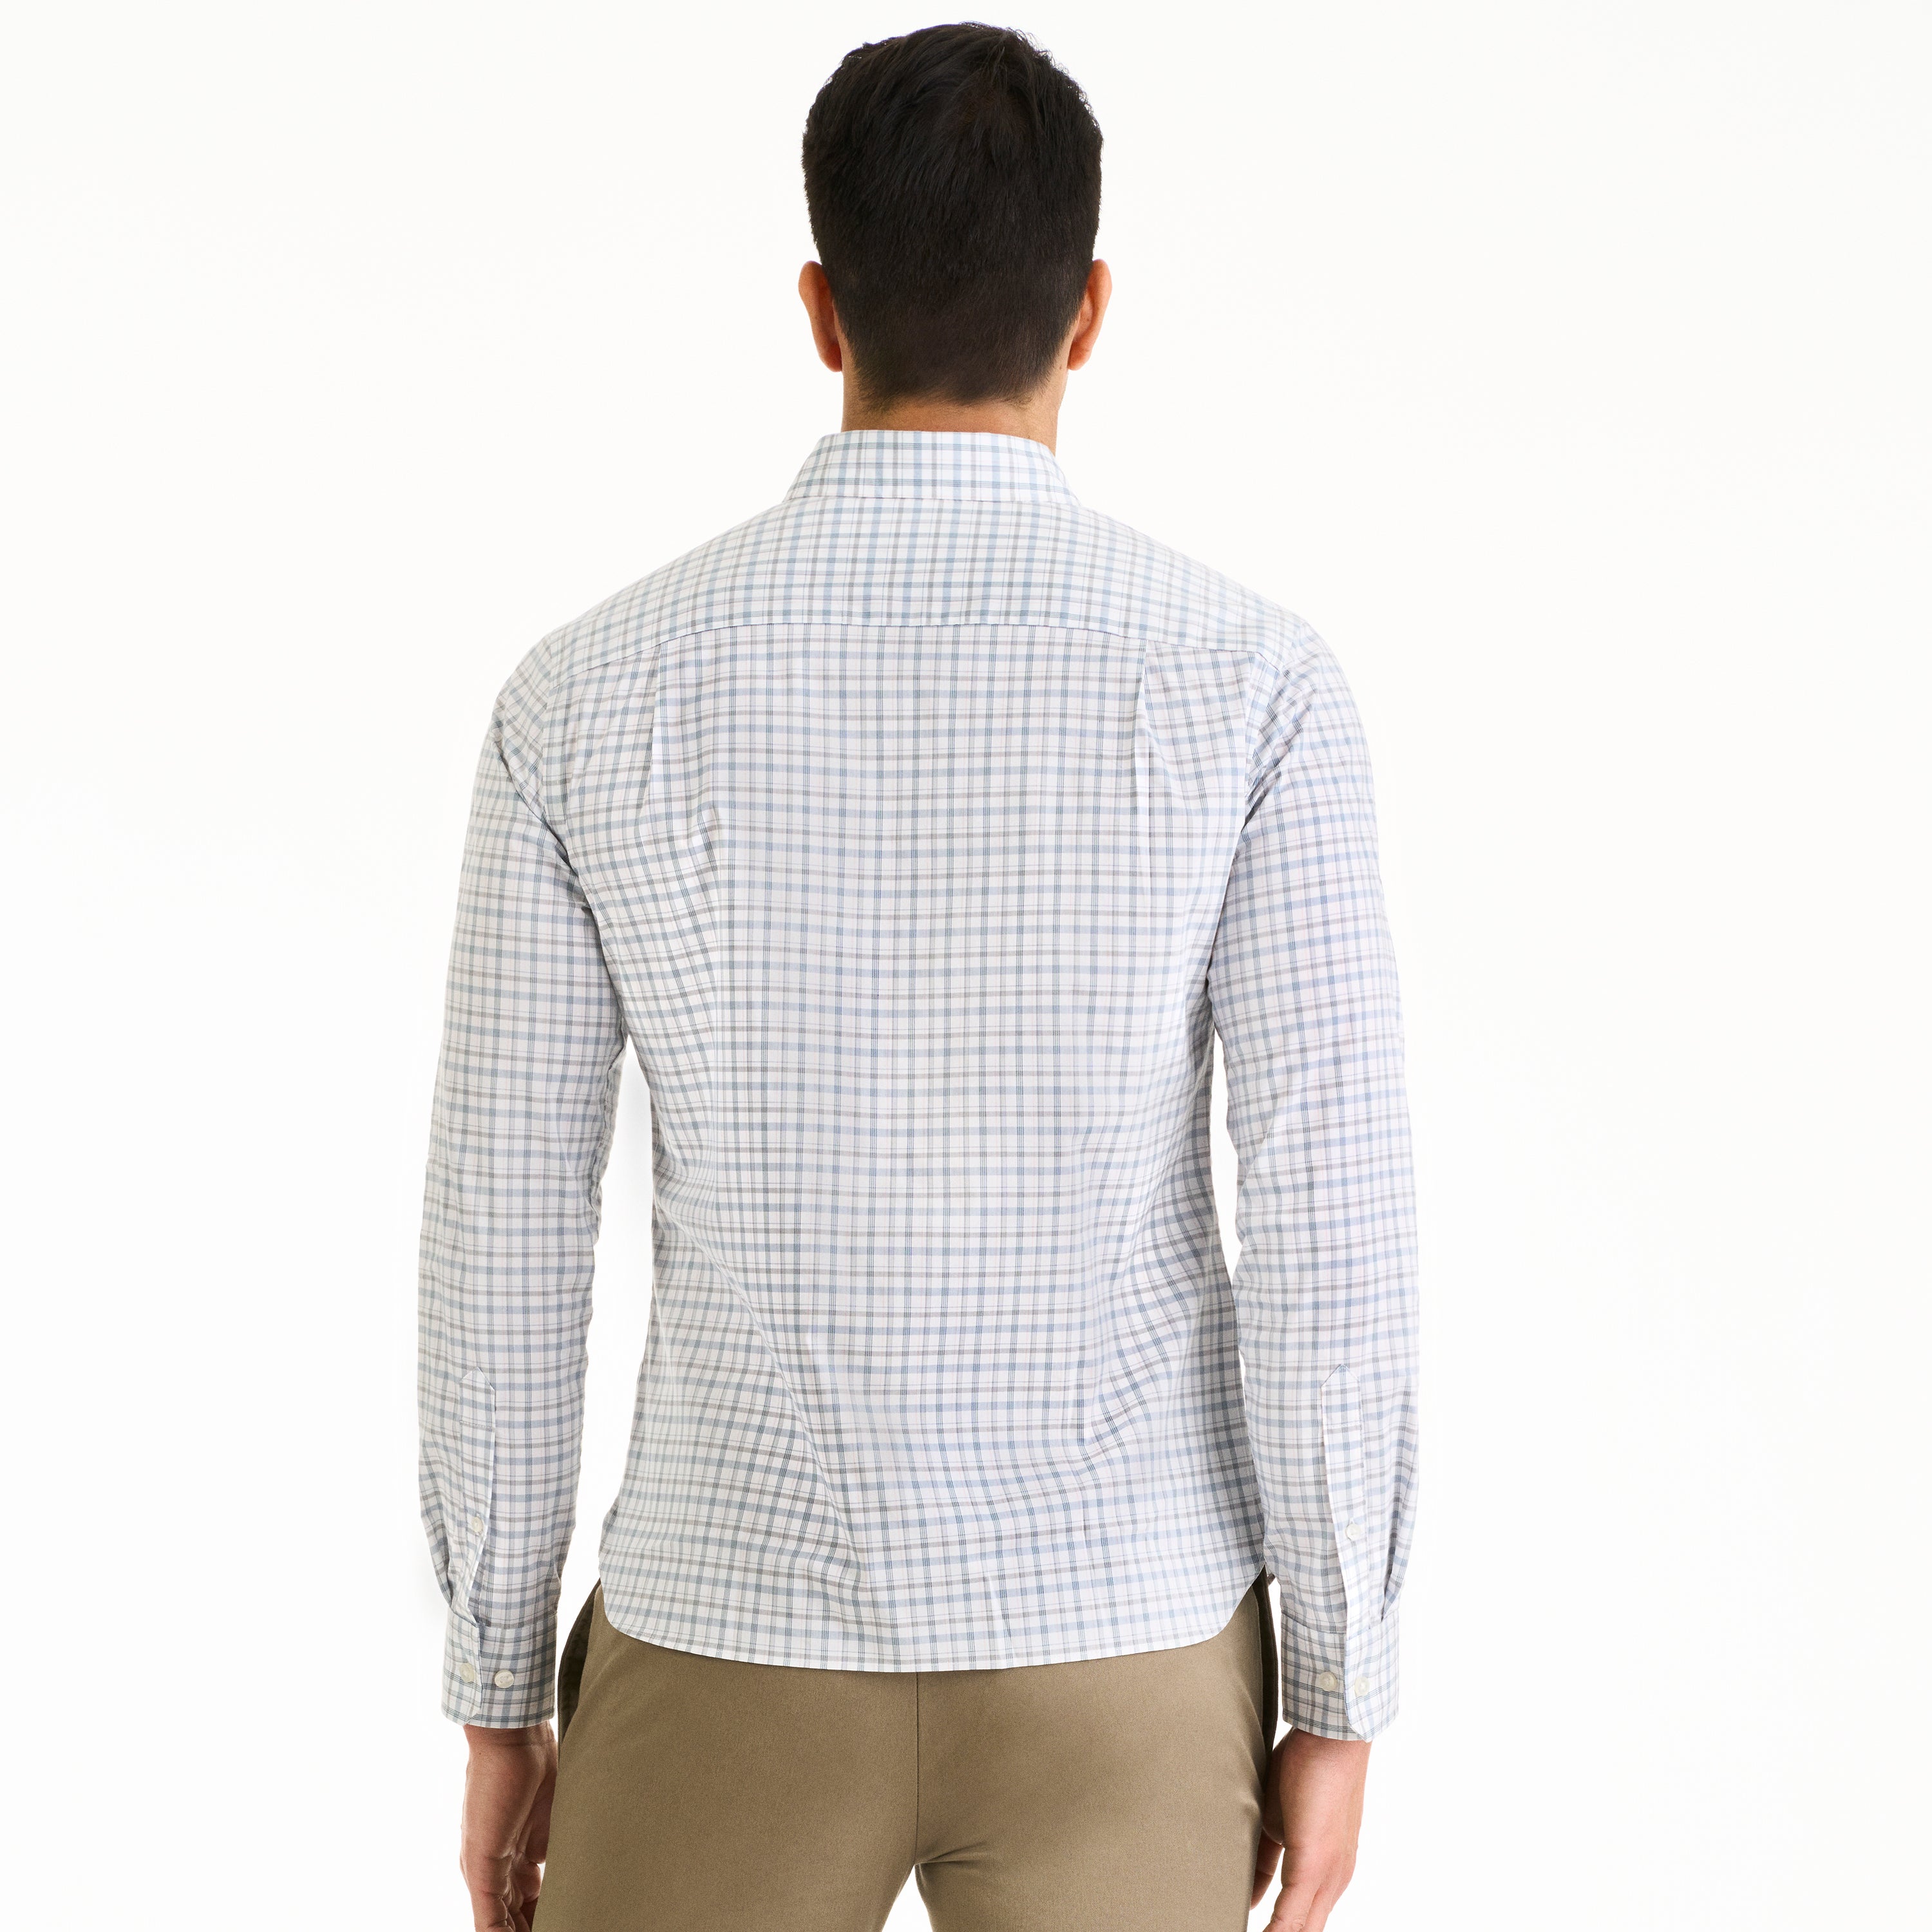 Essential Stain Shield Long Sleeve Shirt Wovens Mini Multi Print - Slim Fit